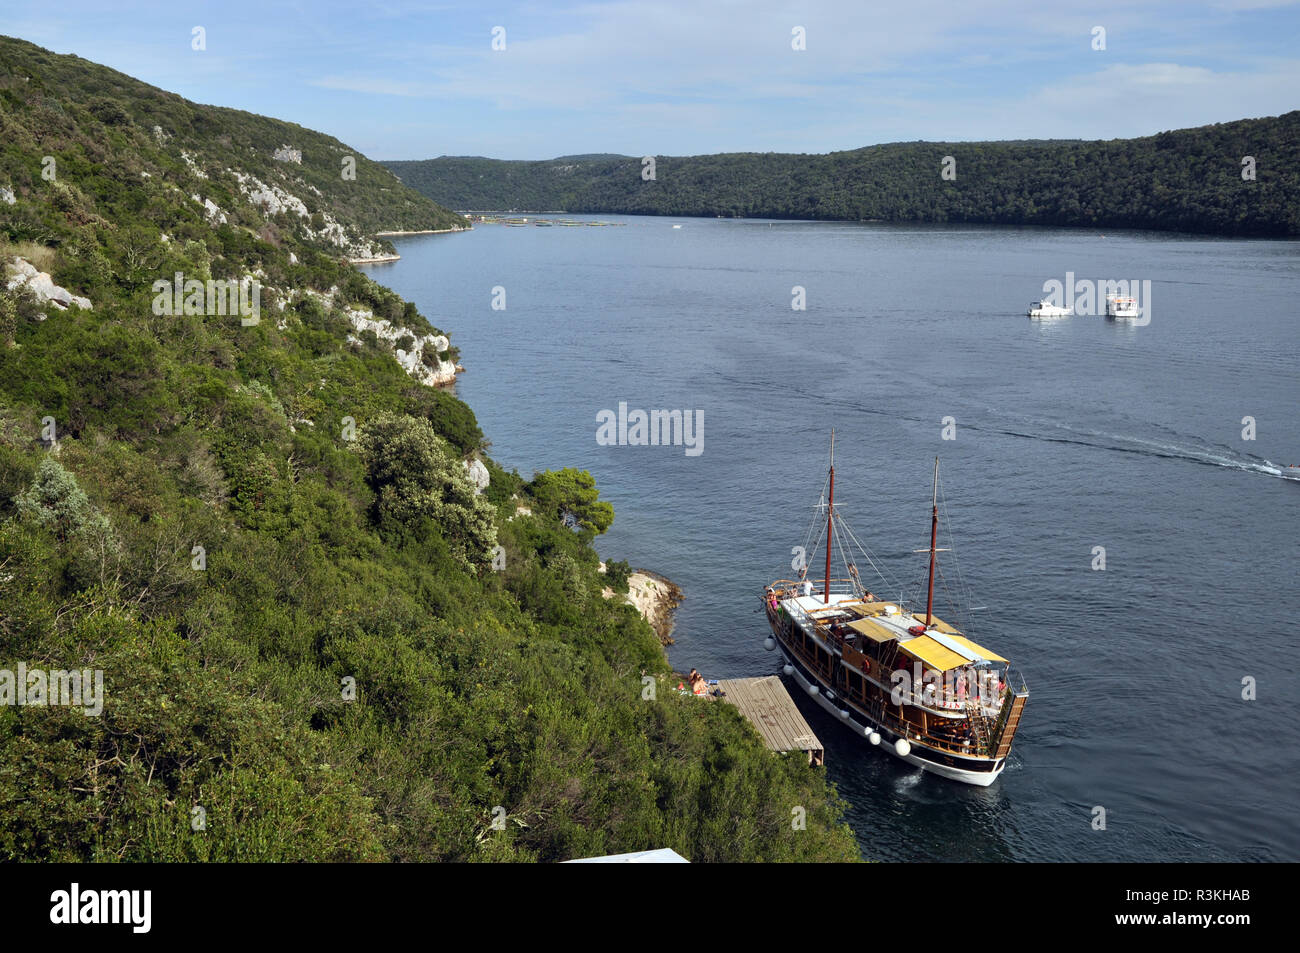 boat on the limfjord,croatia Stock Photo